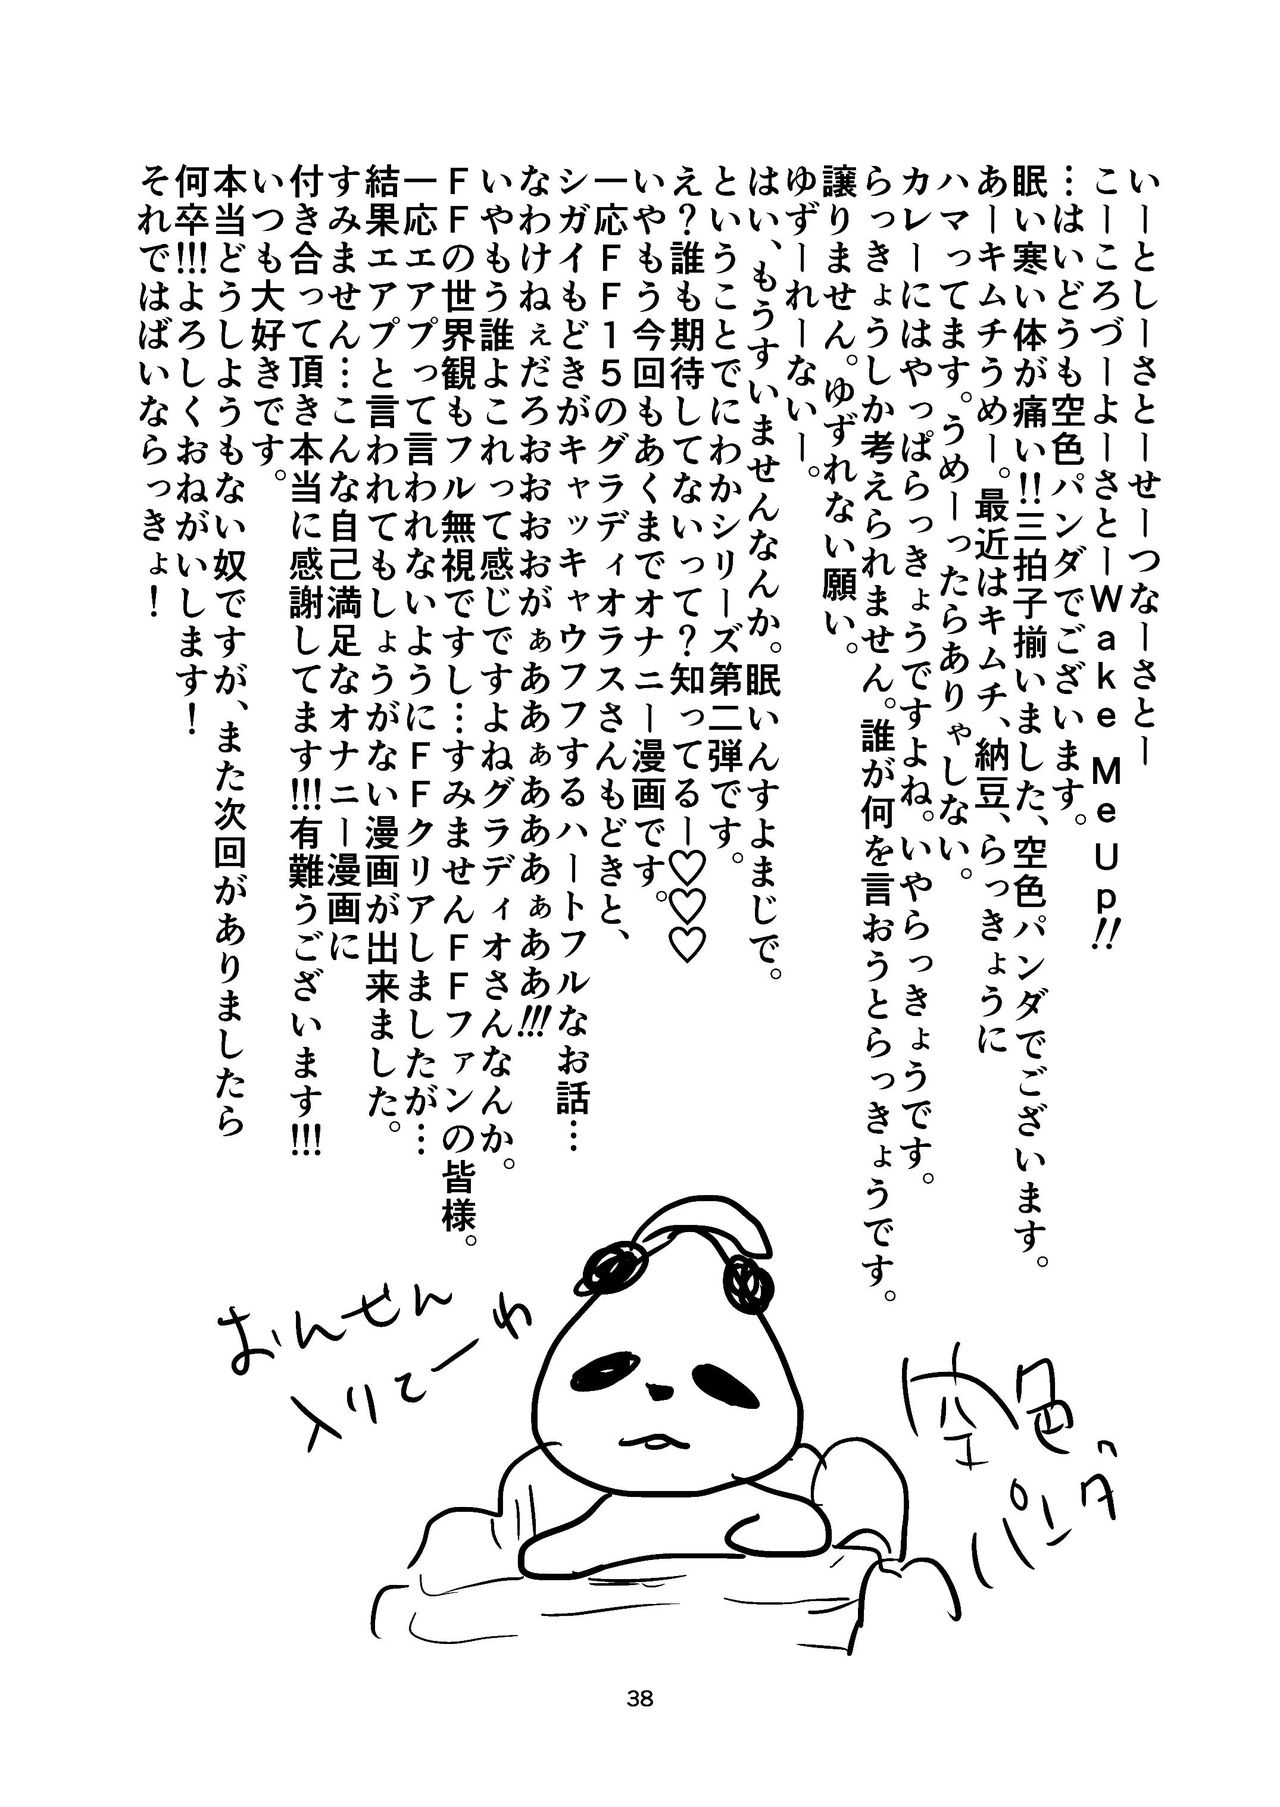 Yamome ヤモメ Sorairo Panda 空色パソダ Final Fantasy ファイナルファンタジー XV Moshimo Niwaka Fan ga Chara Ai dake de Manga o Kaitemita もしもにわかファンがキャラ愛だけで漫画を描いてみたら Gladiolus Amicitia グラディオラス・アミシティア